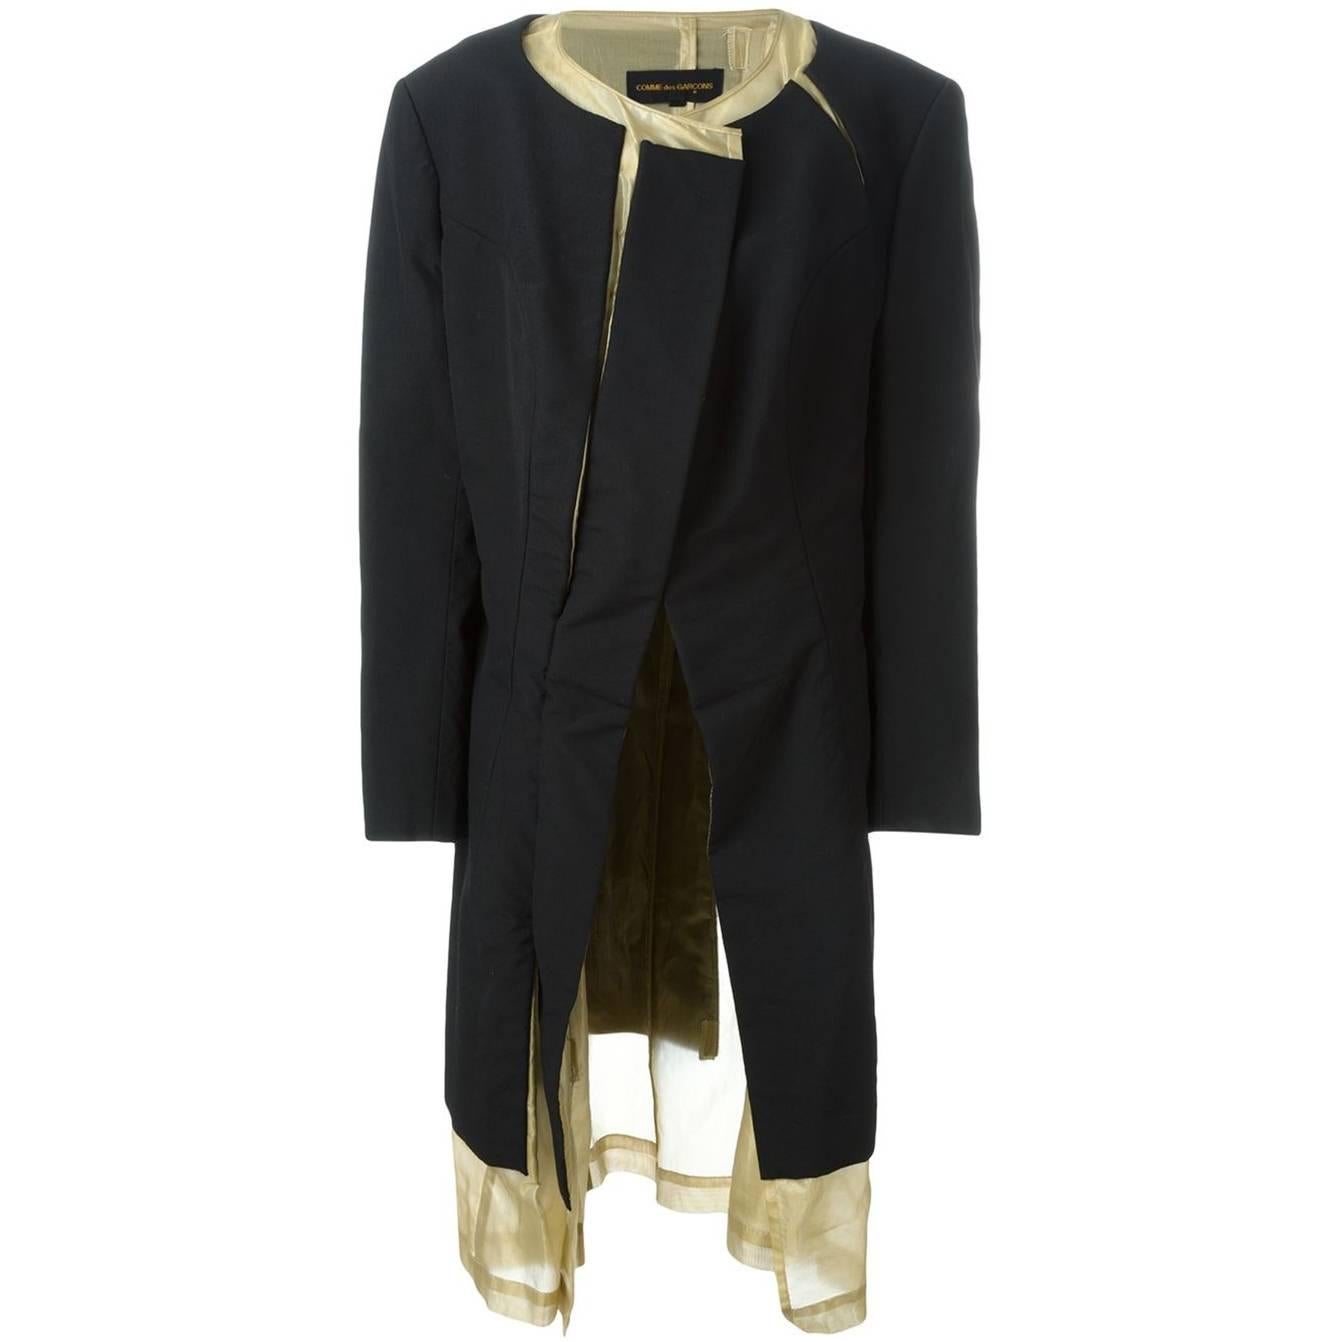 1997 COMME des GARÇONS Rei Kawakubo black and gold layered coat jacket